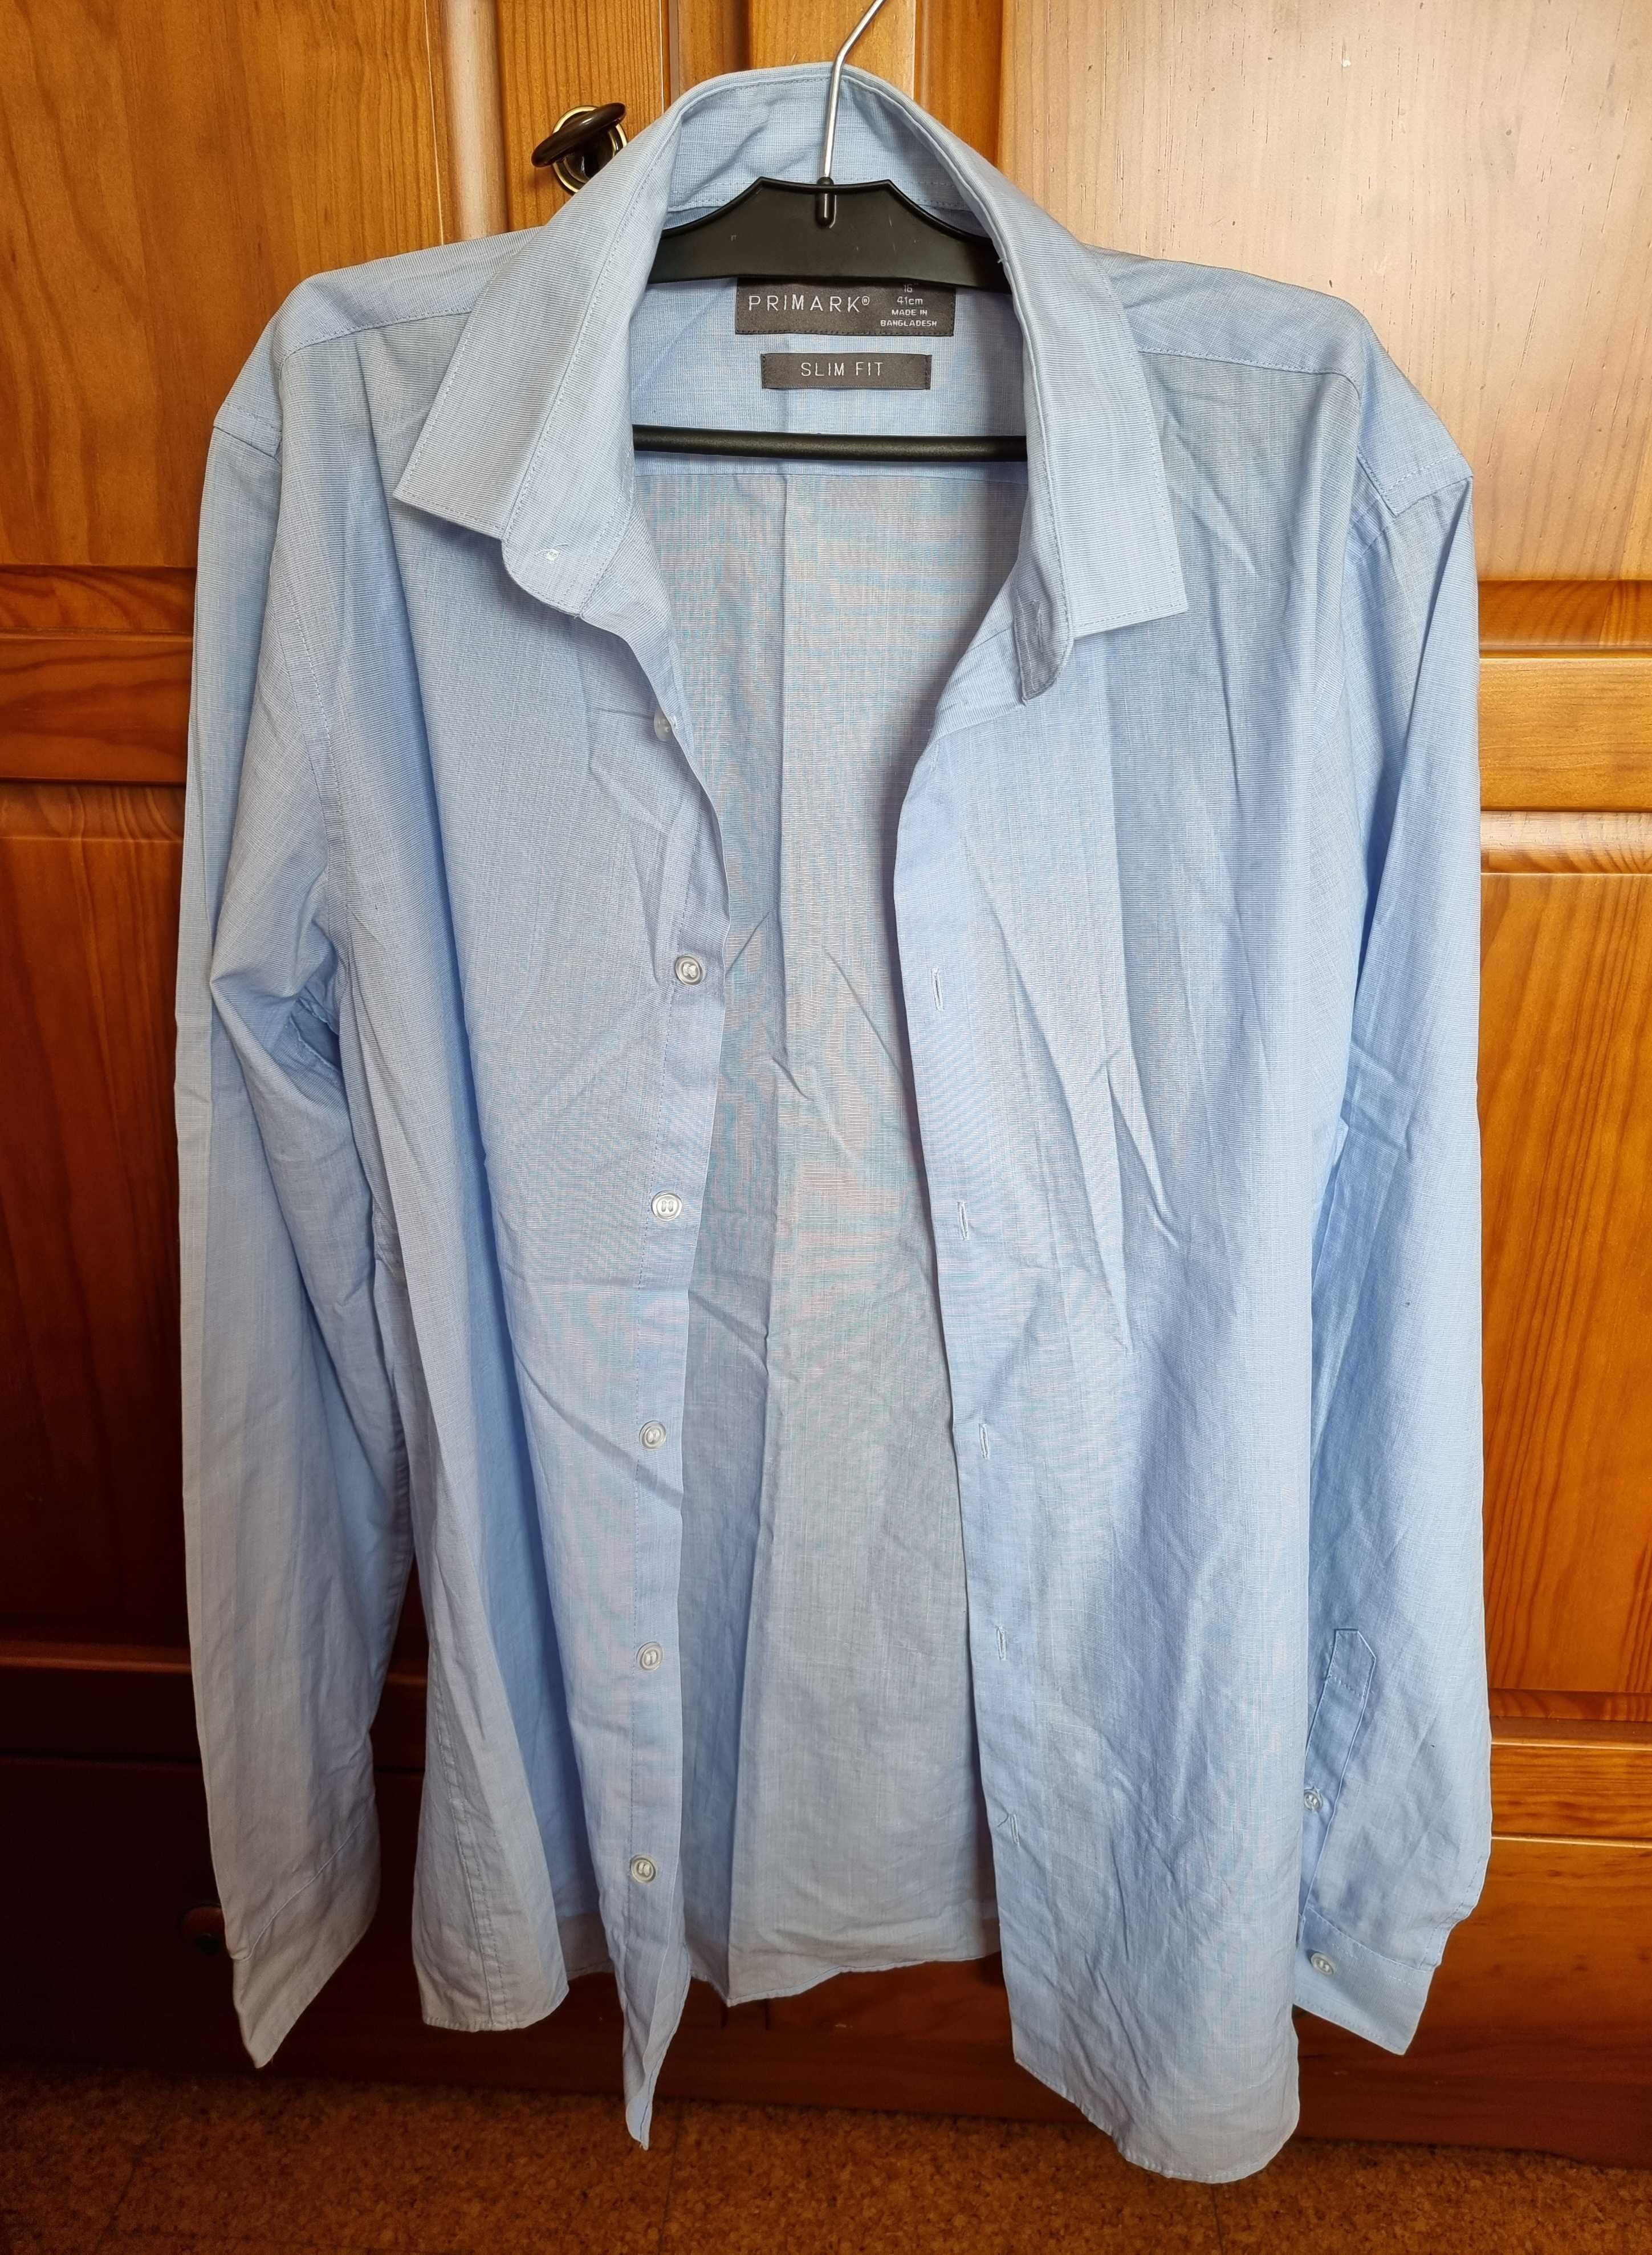 Camisa azul clara lisa slim fit Primark, 41 cm